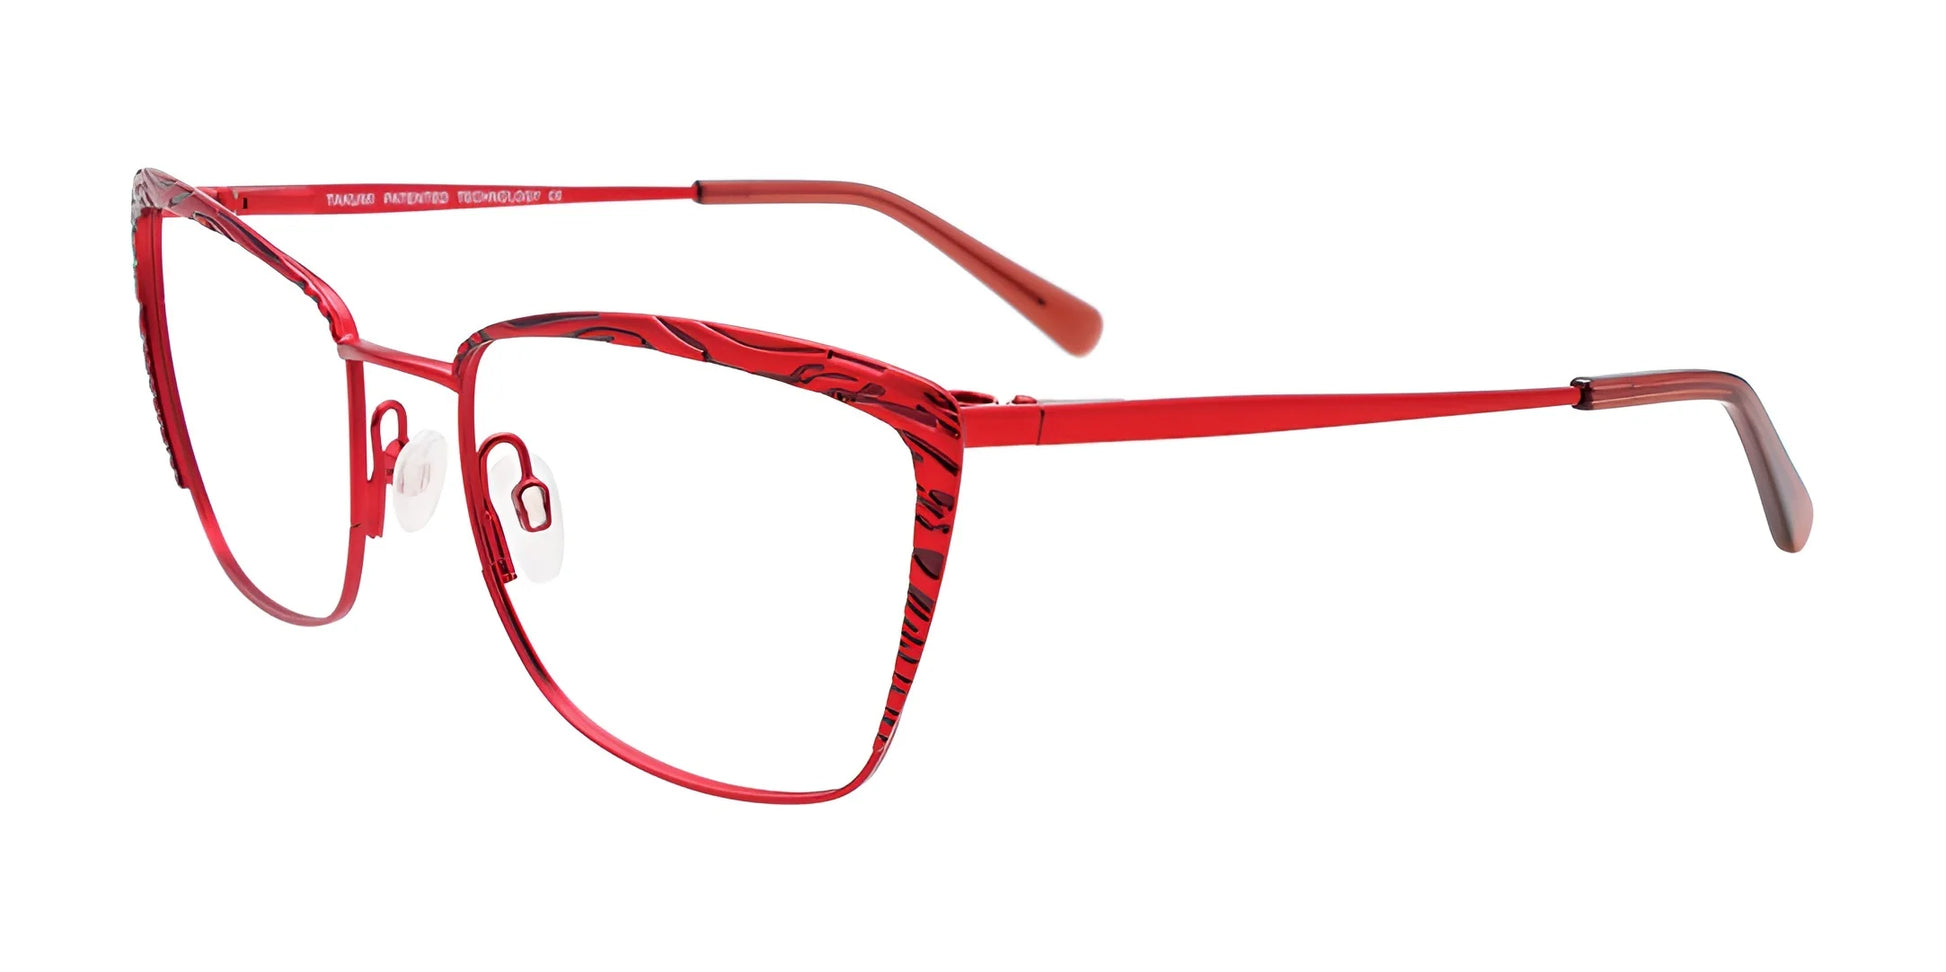 Takumi TK1201 Eyeglasses Red & Wine / Red